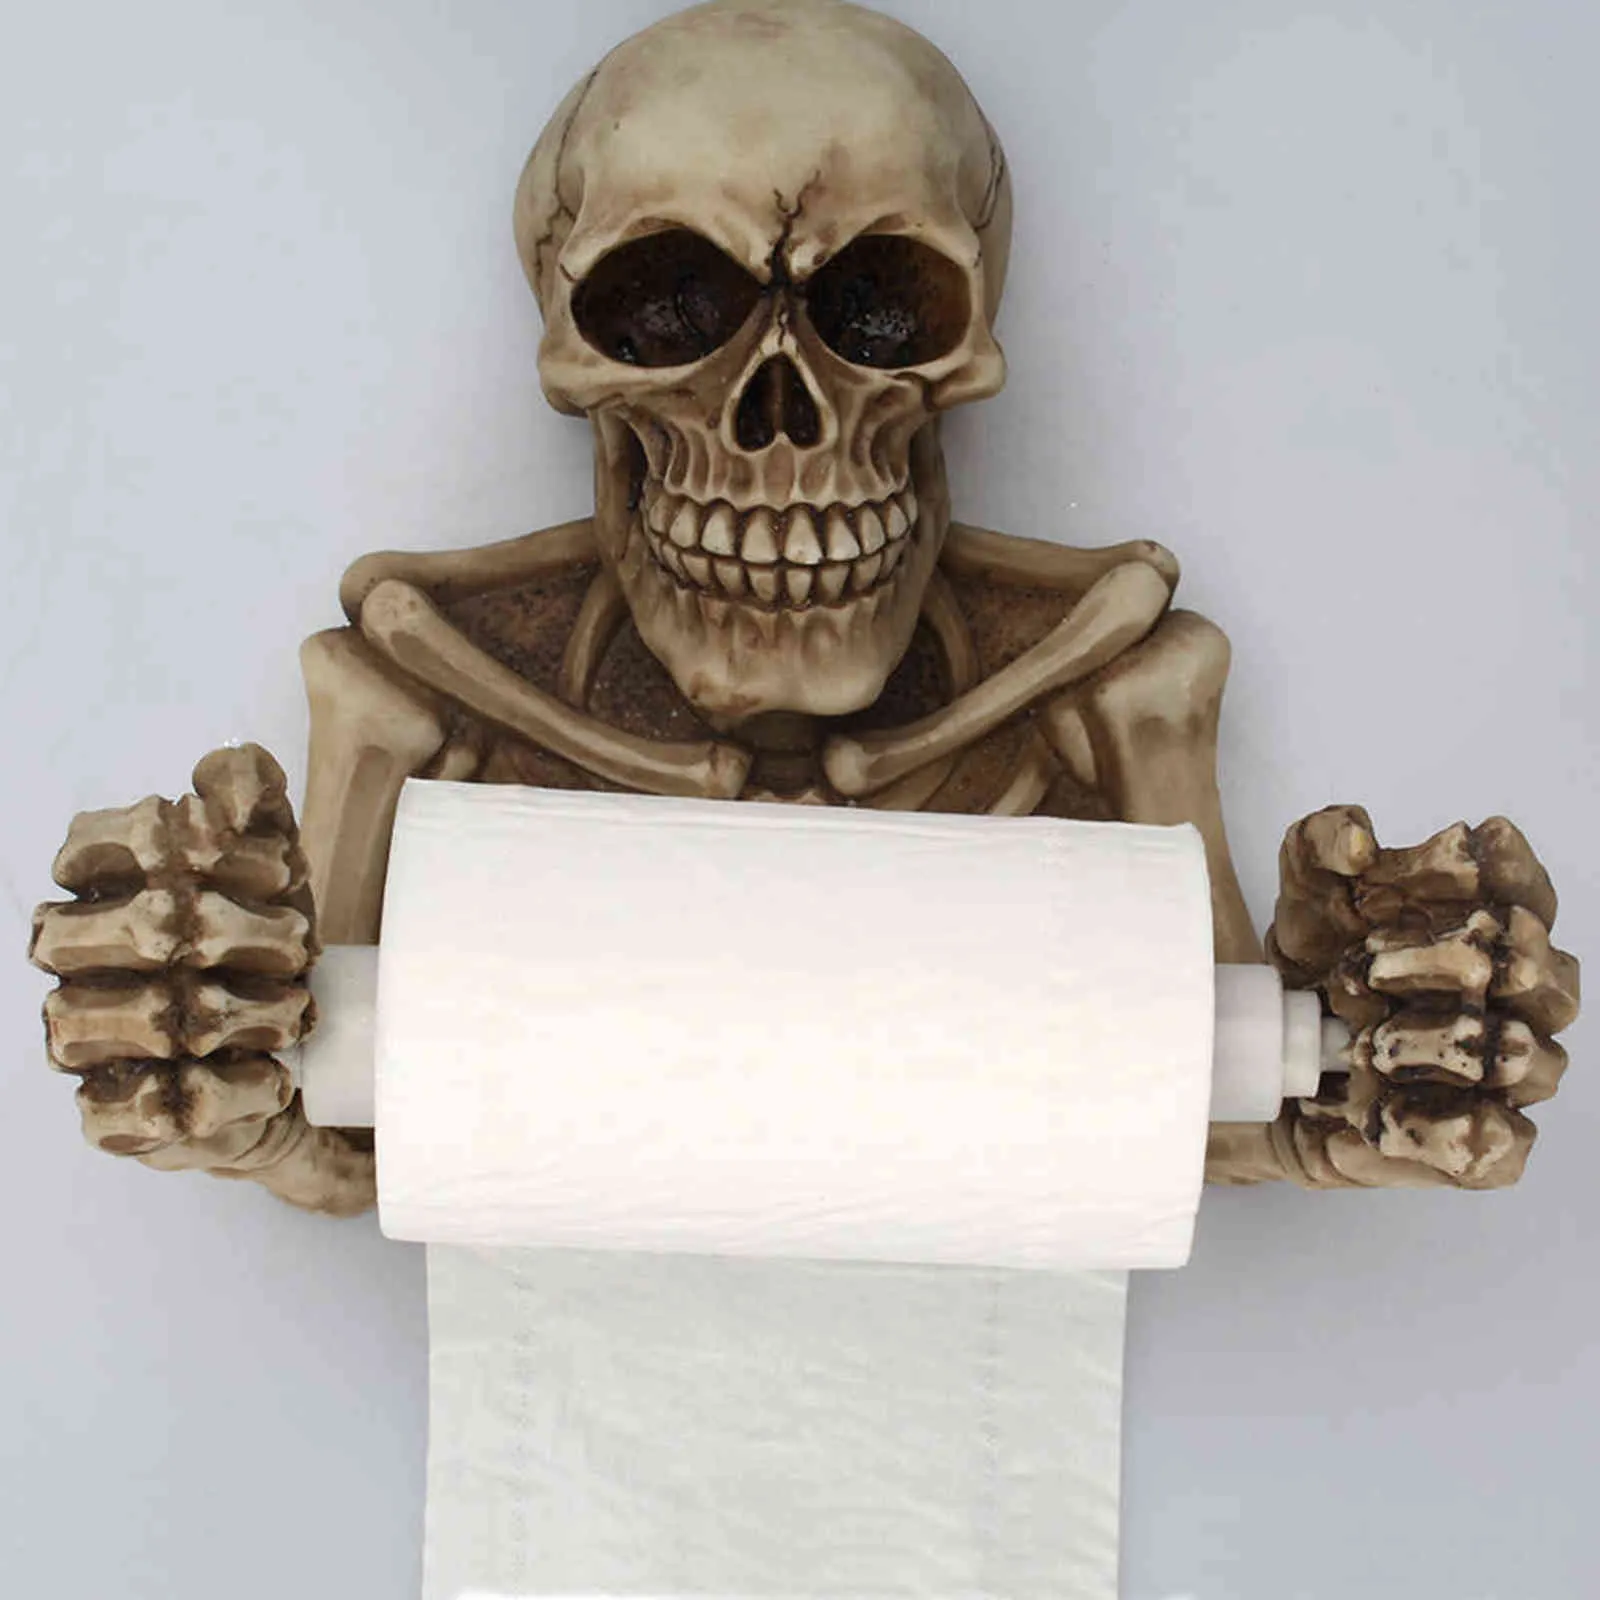 Skull Shape Paper Holder Resin Tissue Holder Wall Hanging Toilet Pumping Roll Paper Rack Halloween Party Decor H11129746301